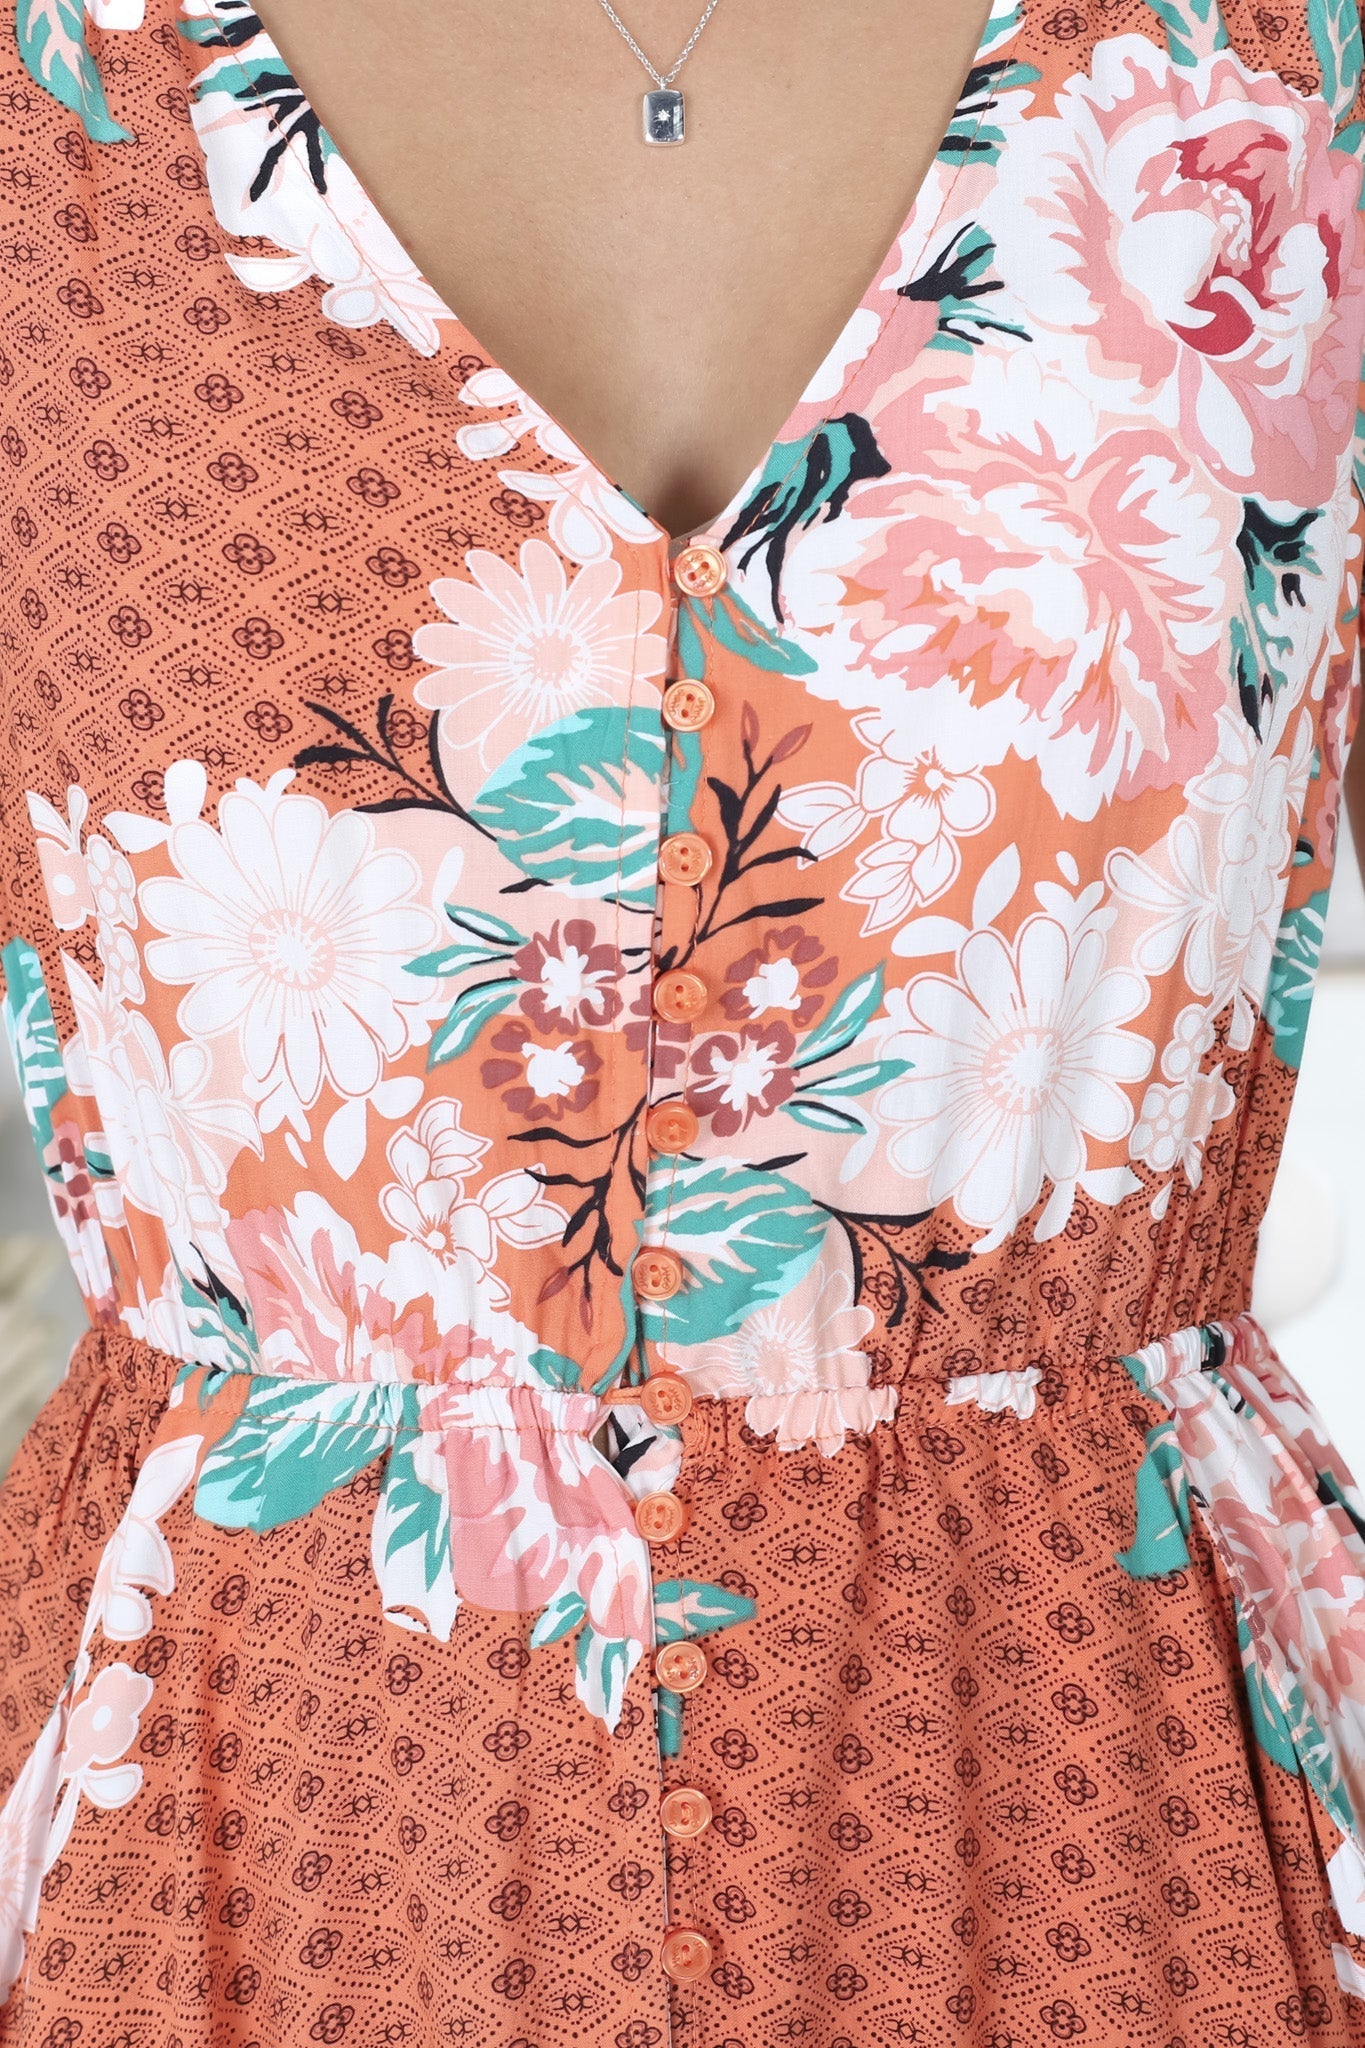 JAASE - Lizzie Mini Dress: Butterfly Cap Sleeve Button Down Dress with Pockets in Fleur Print